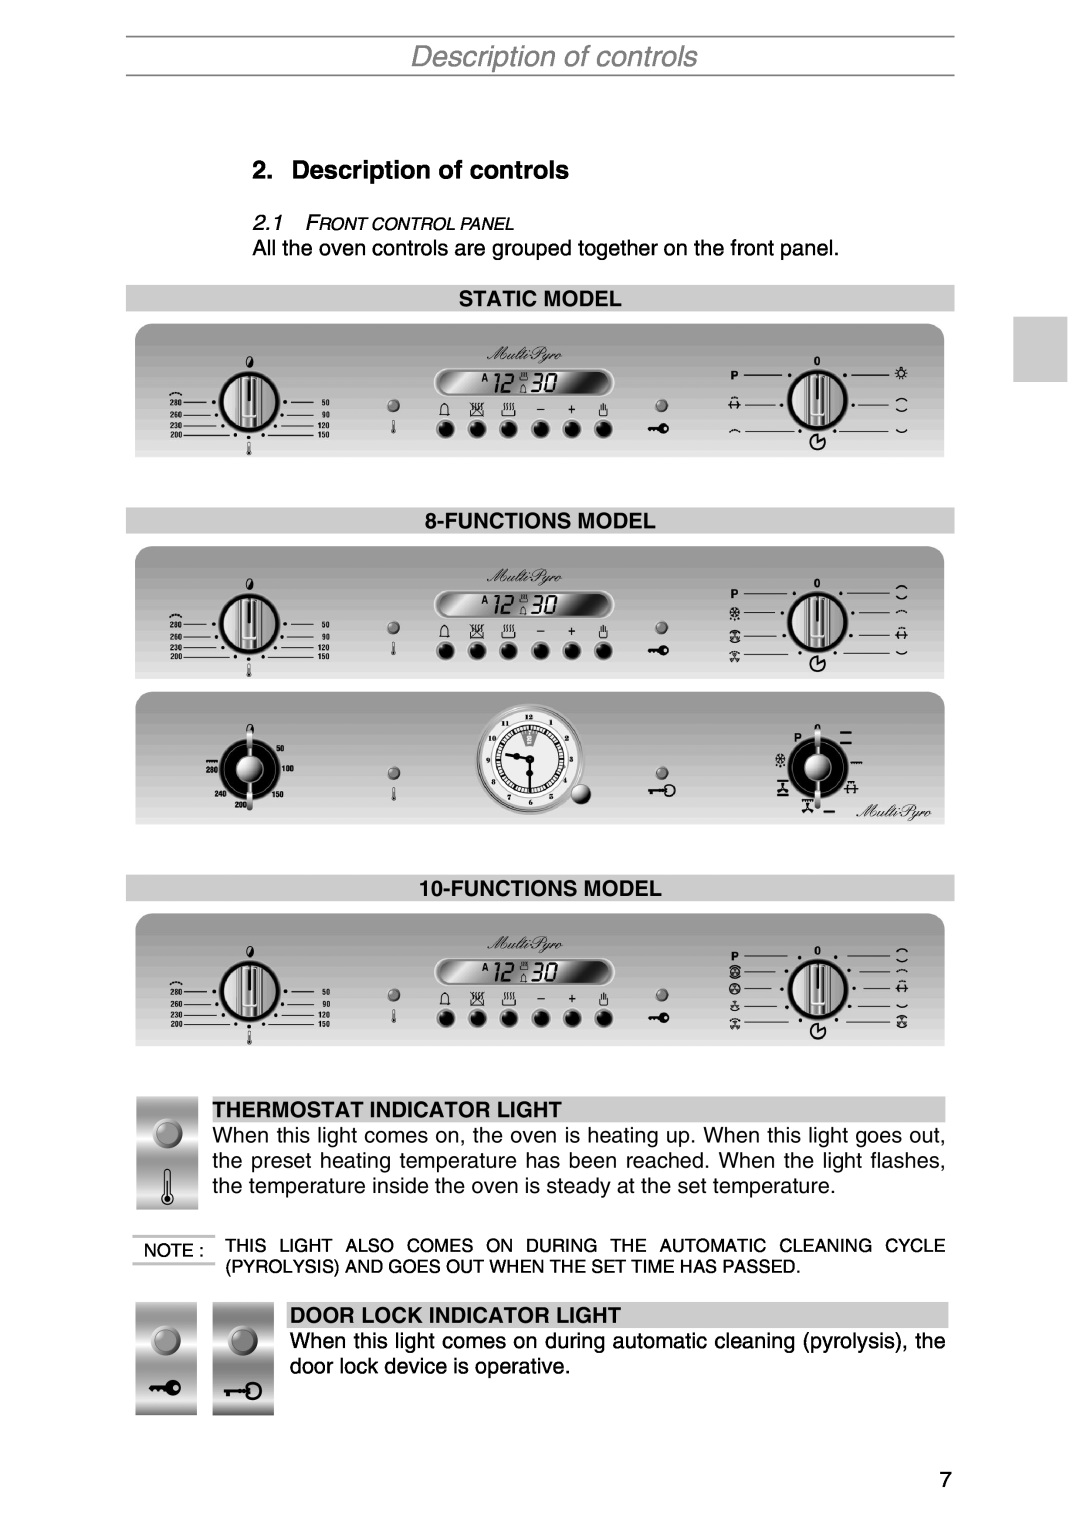 Smeg SIL290X manual Description of controls, STATIC MODEL 8-FUNCTIONS MODEL 10-FUNCTIONS MODEL, Thermostat Indicator Light 